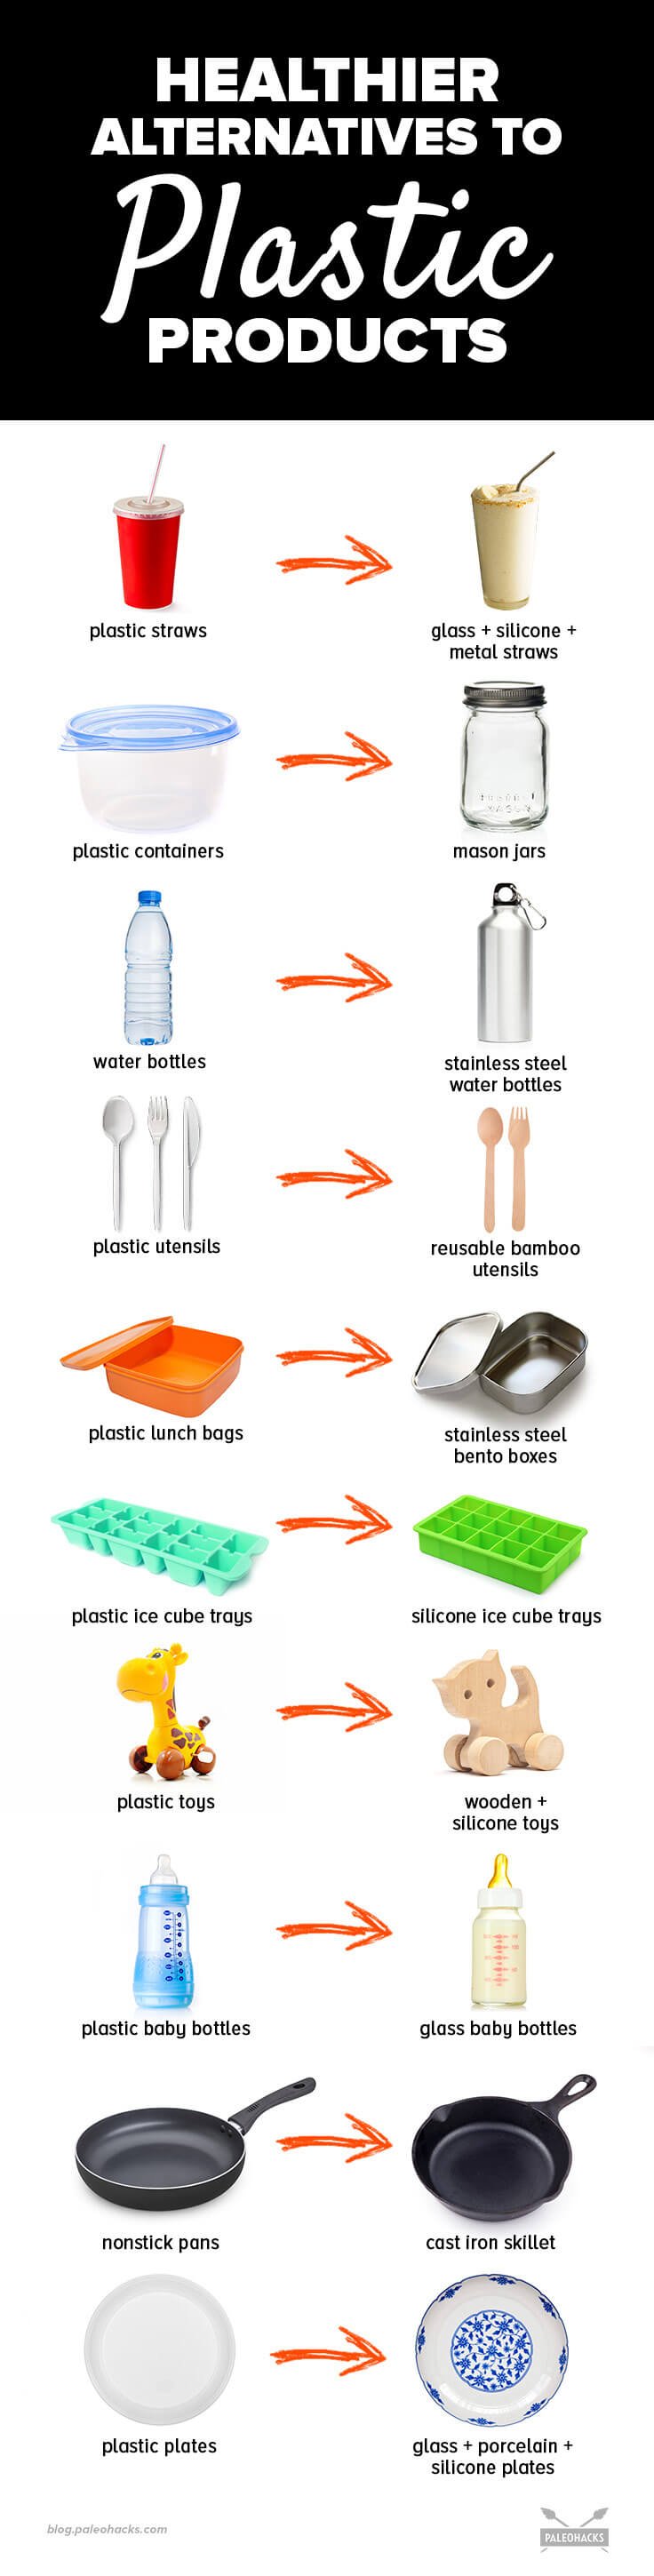 Healthier-Alternatives-to-Plastic-Products-infog-1.jpg